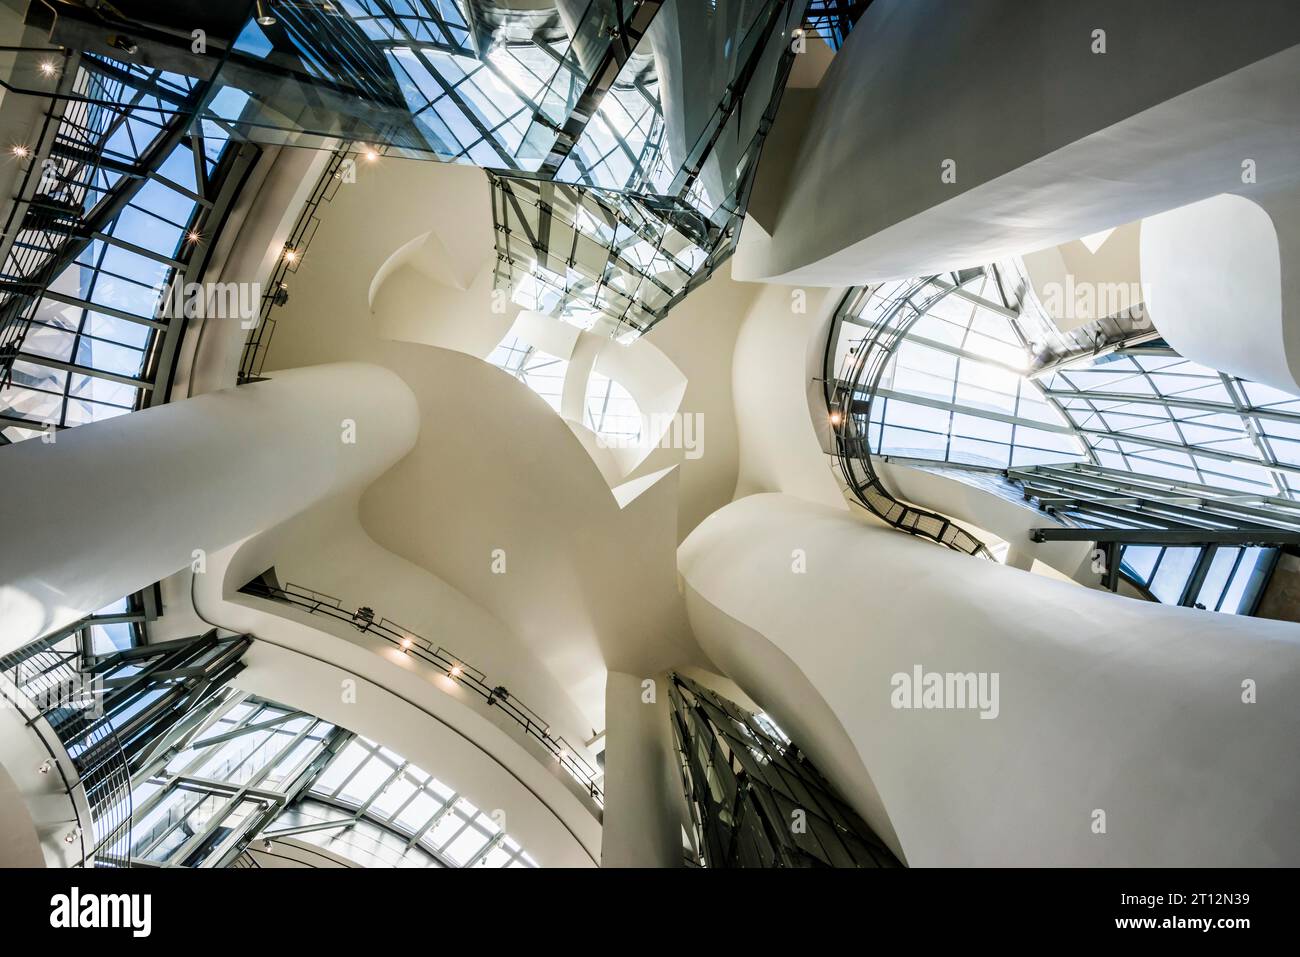 Guggenheim Museum, architetto Frank Gehry, sala d'ingresso, vista interna, Bilbao, paesi Baschi, Spagna Foto Stock